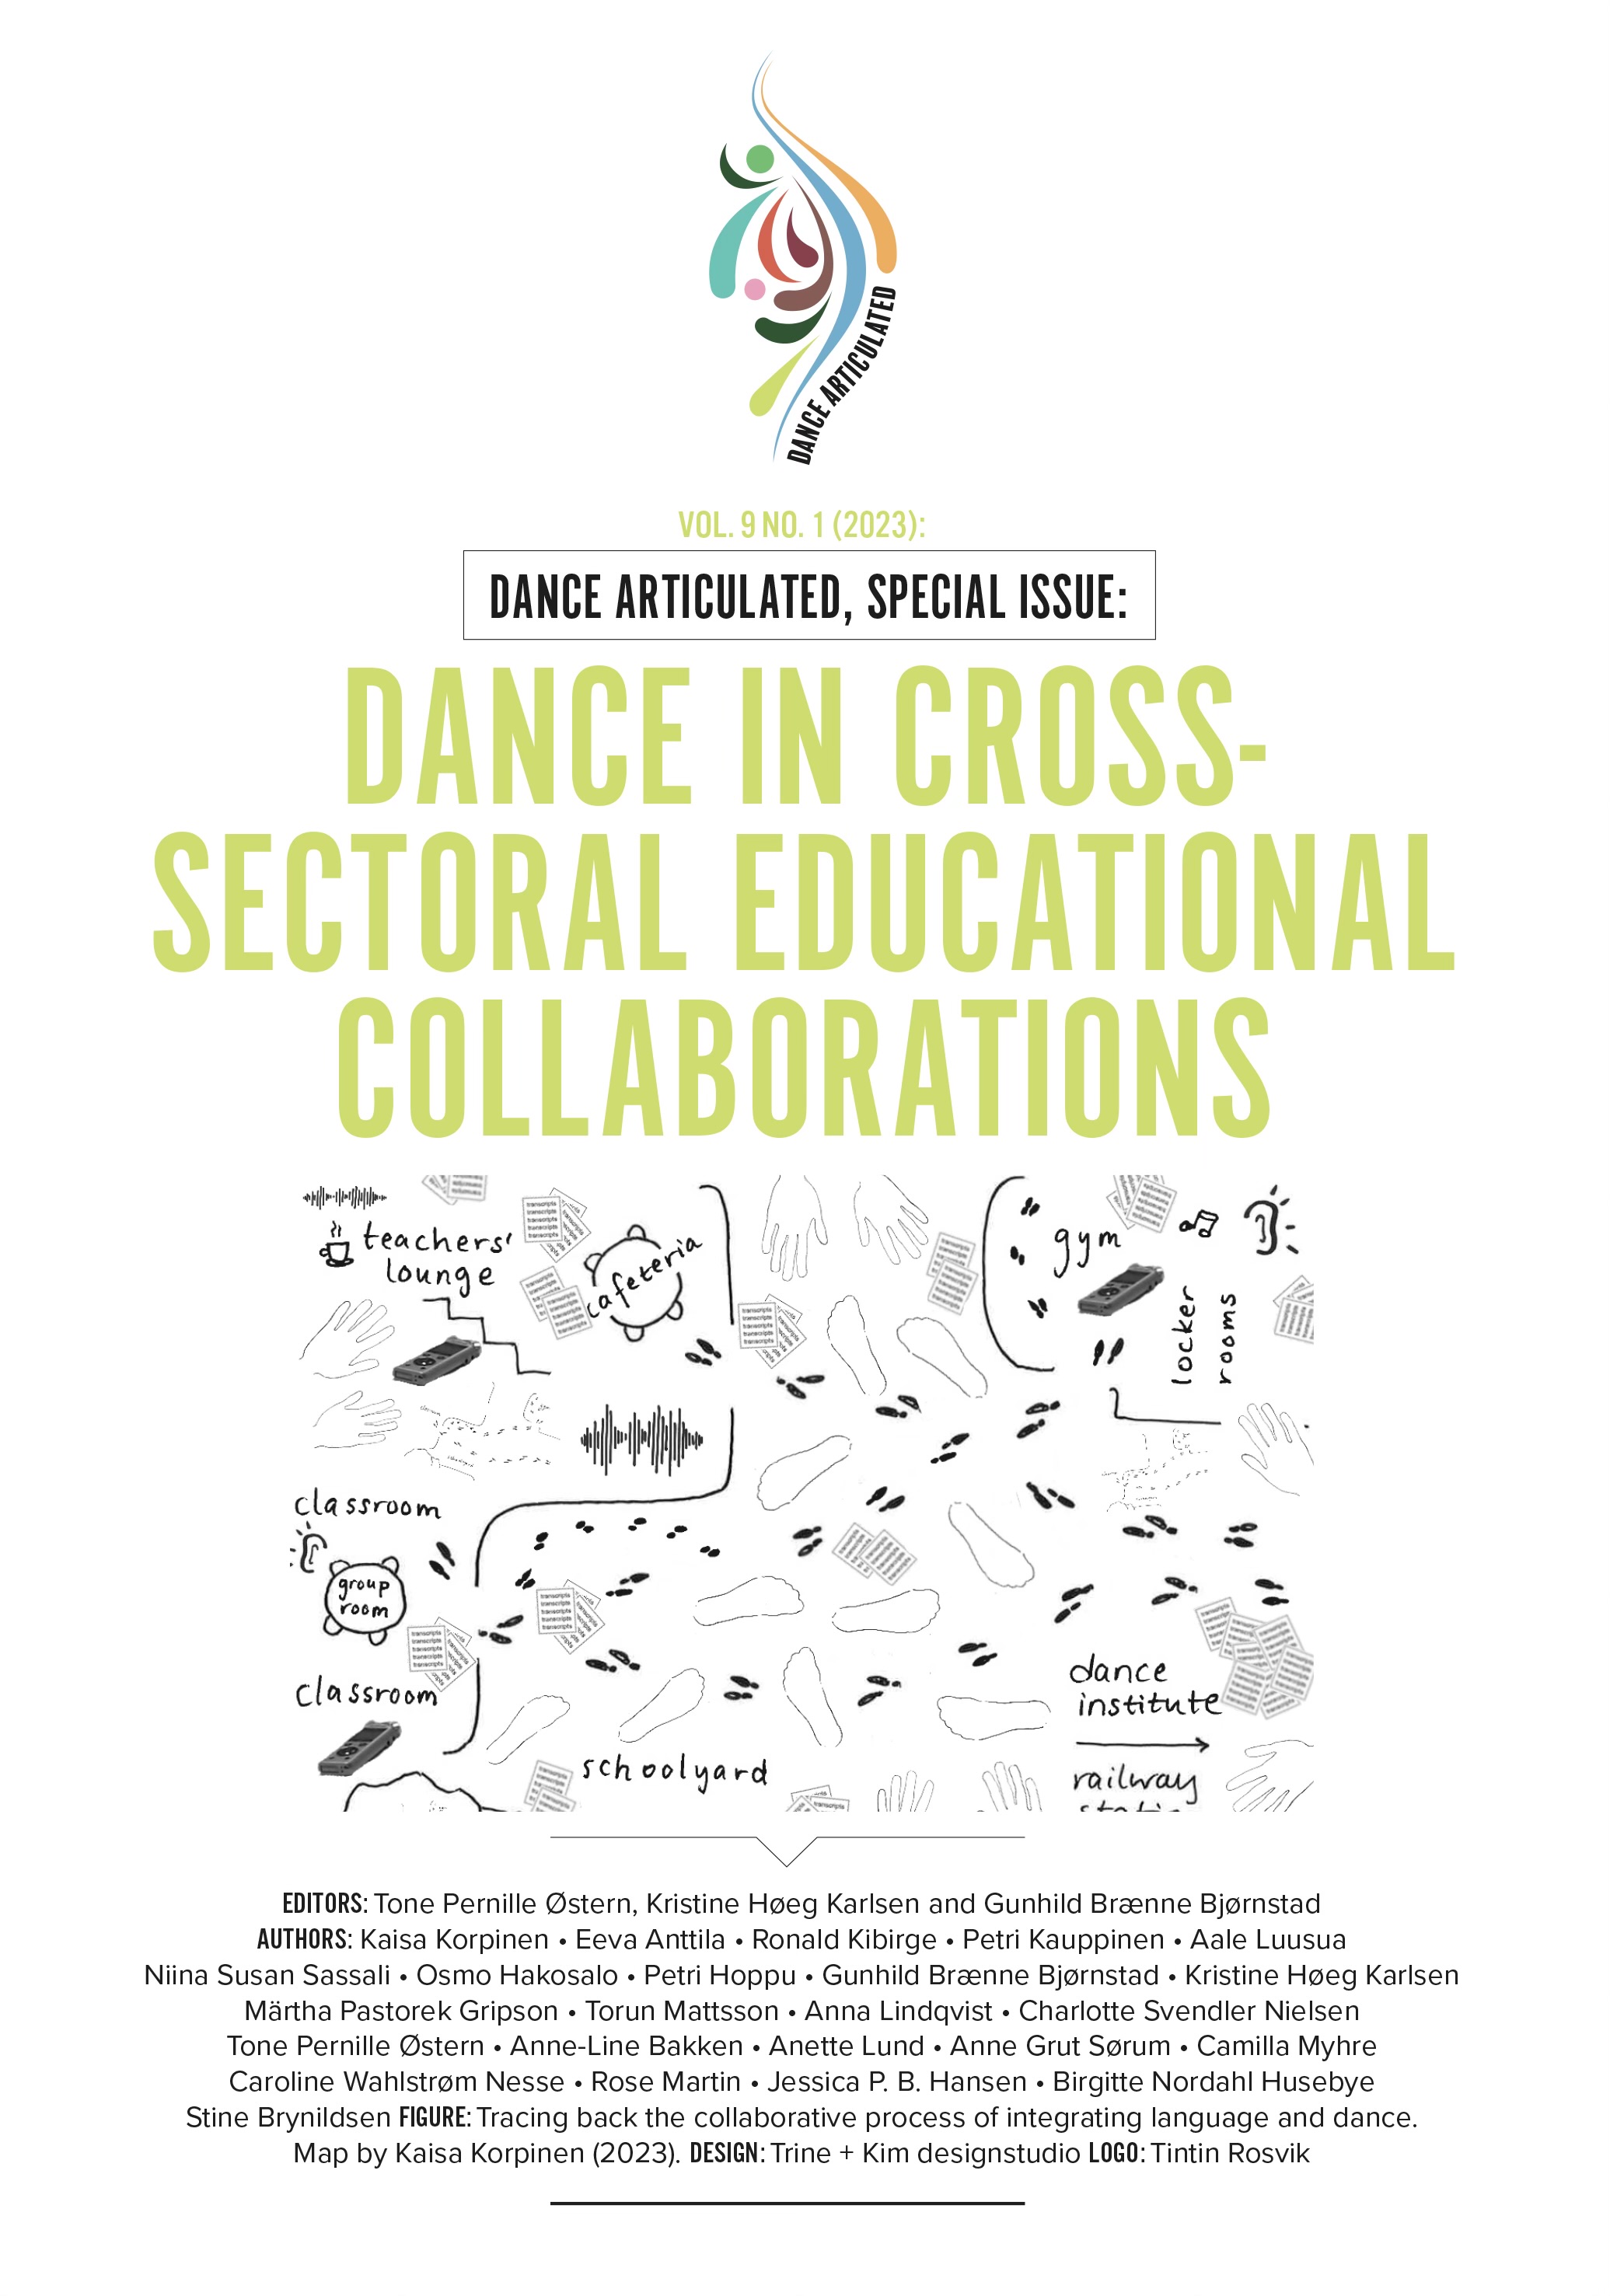 					Visa Vol 9 Nr 1 (2023): Dance in cross-sectoral educational collaborations
				